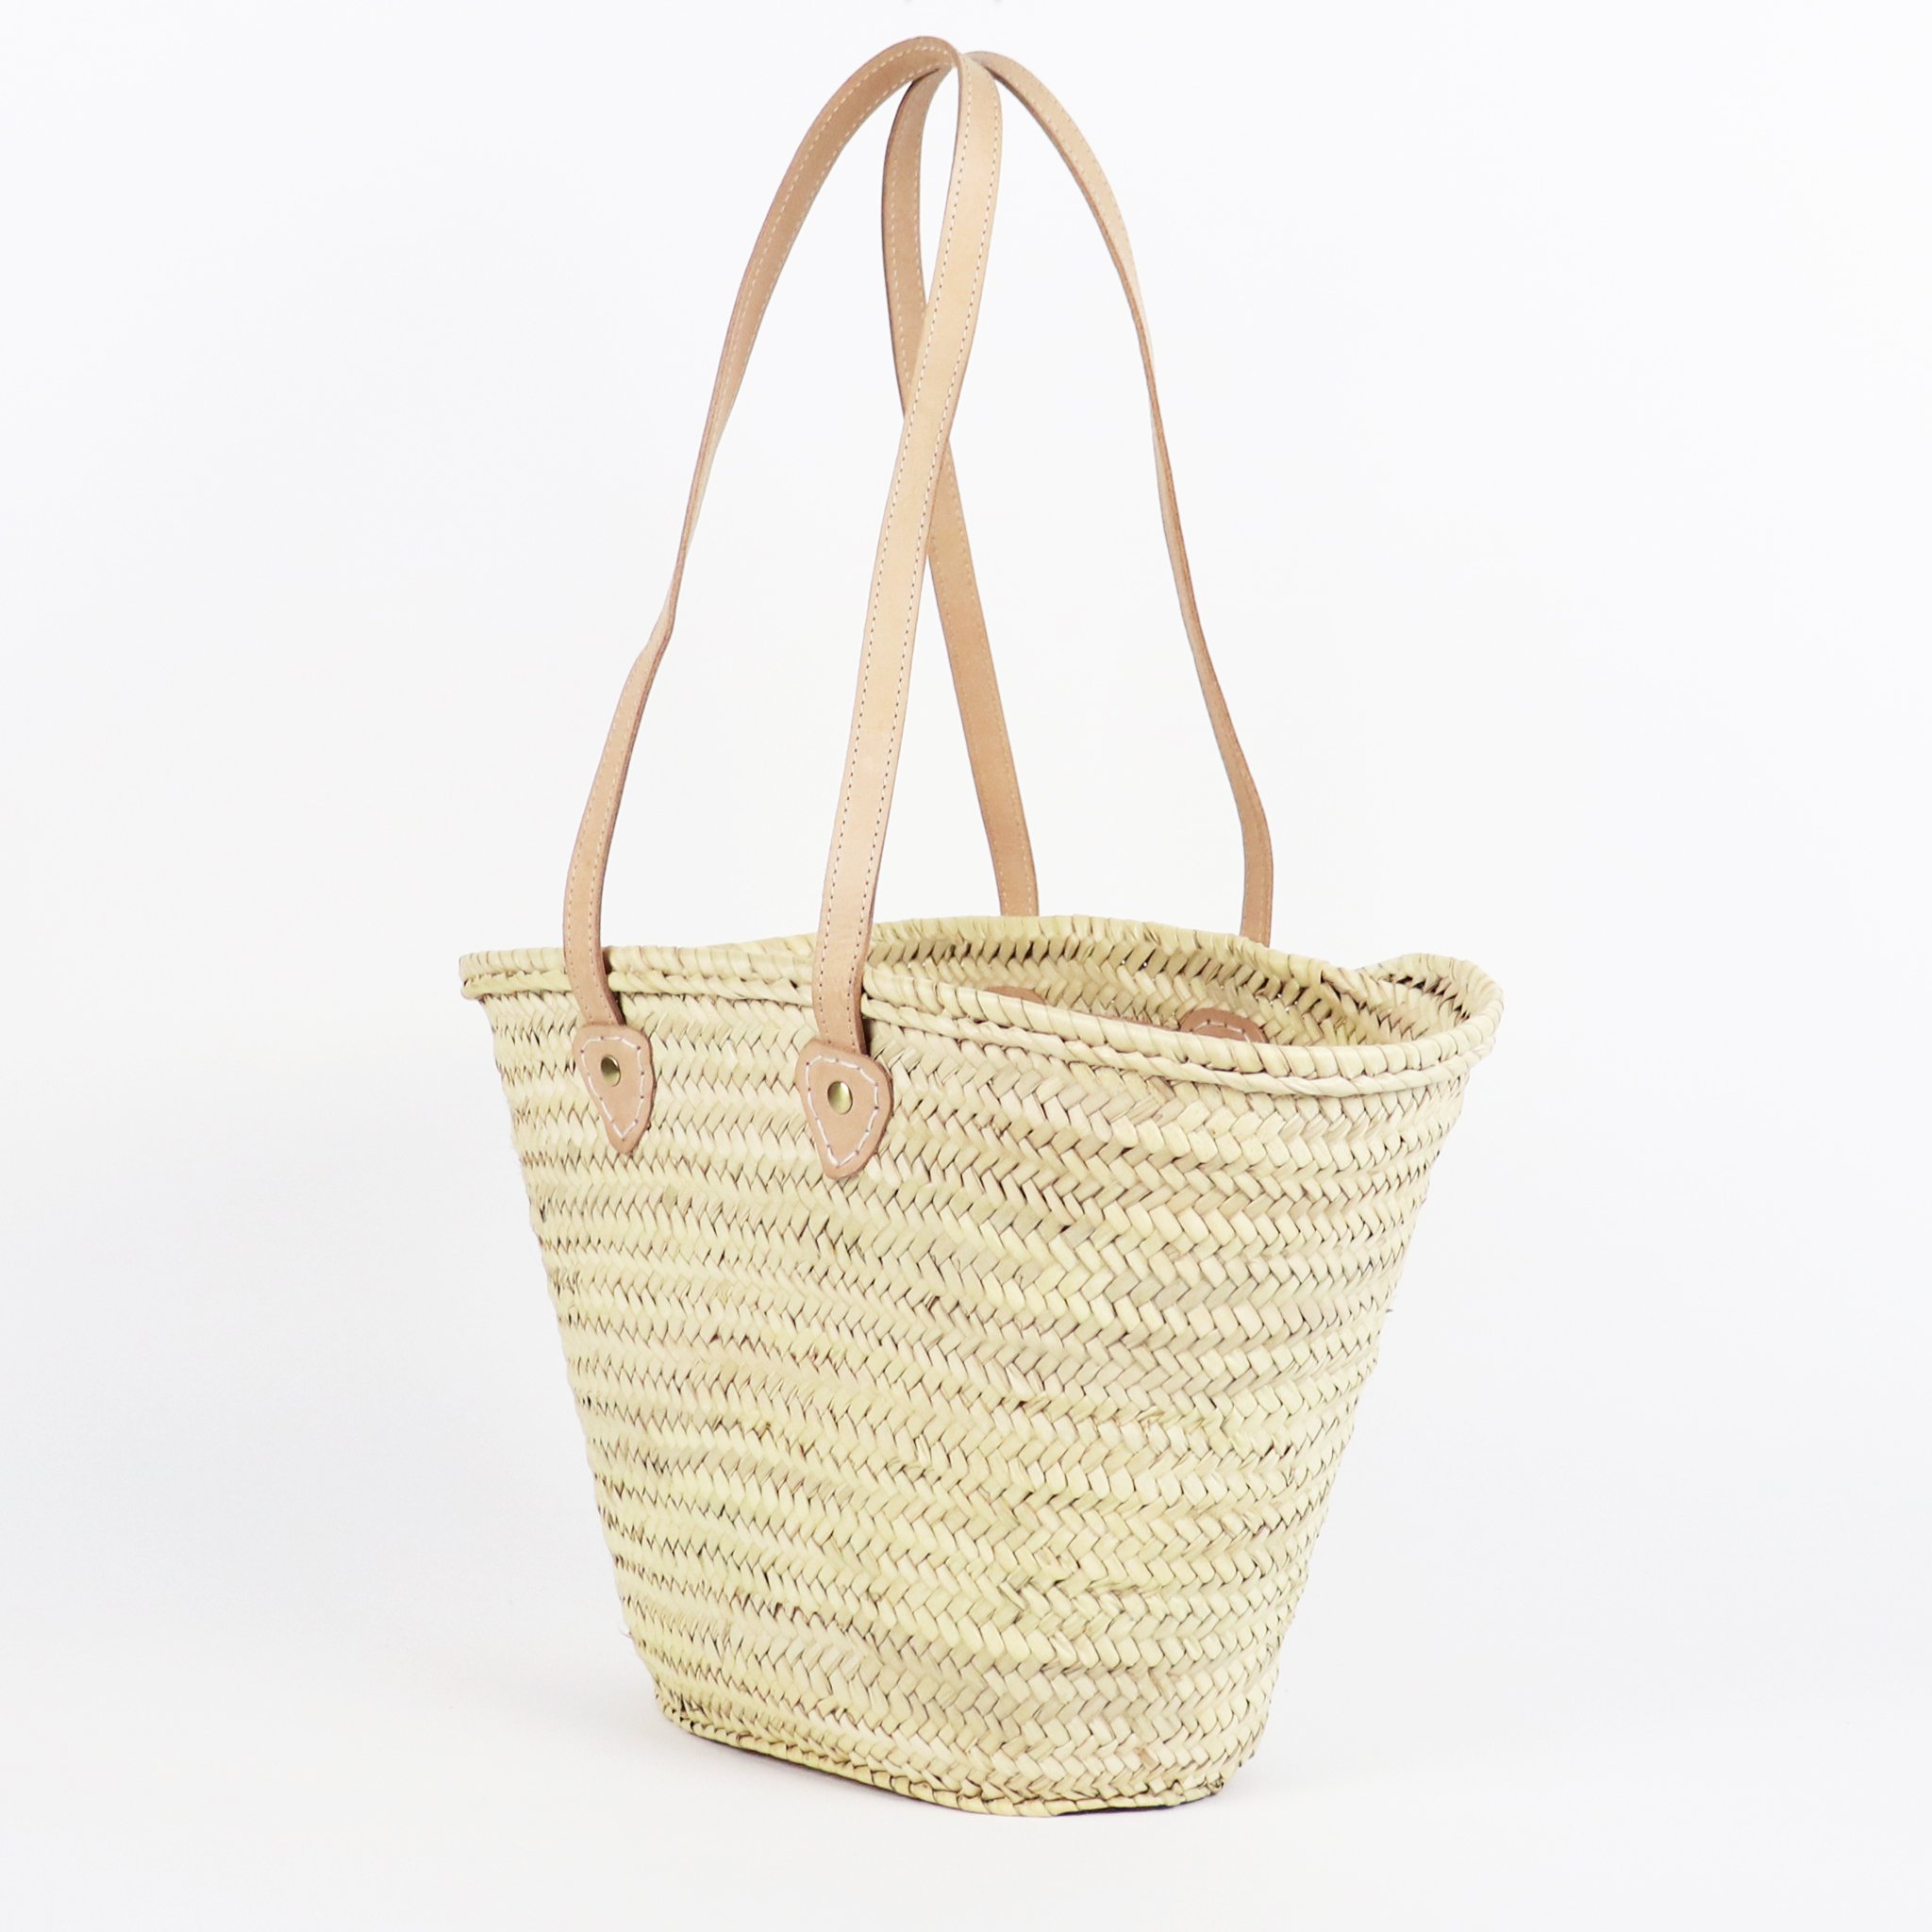 French Basket straw bag leather handles beach handbag Moroccan